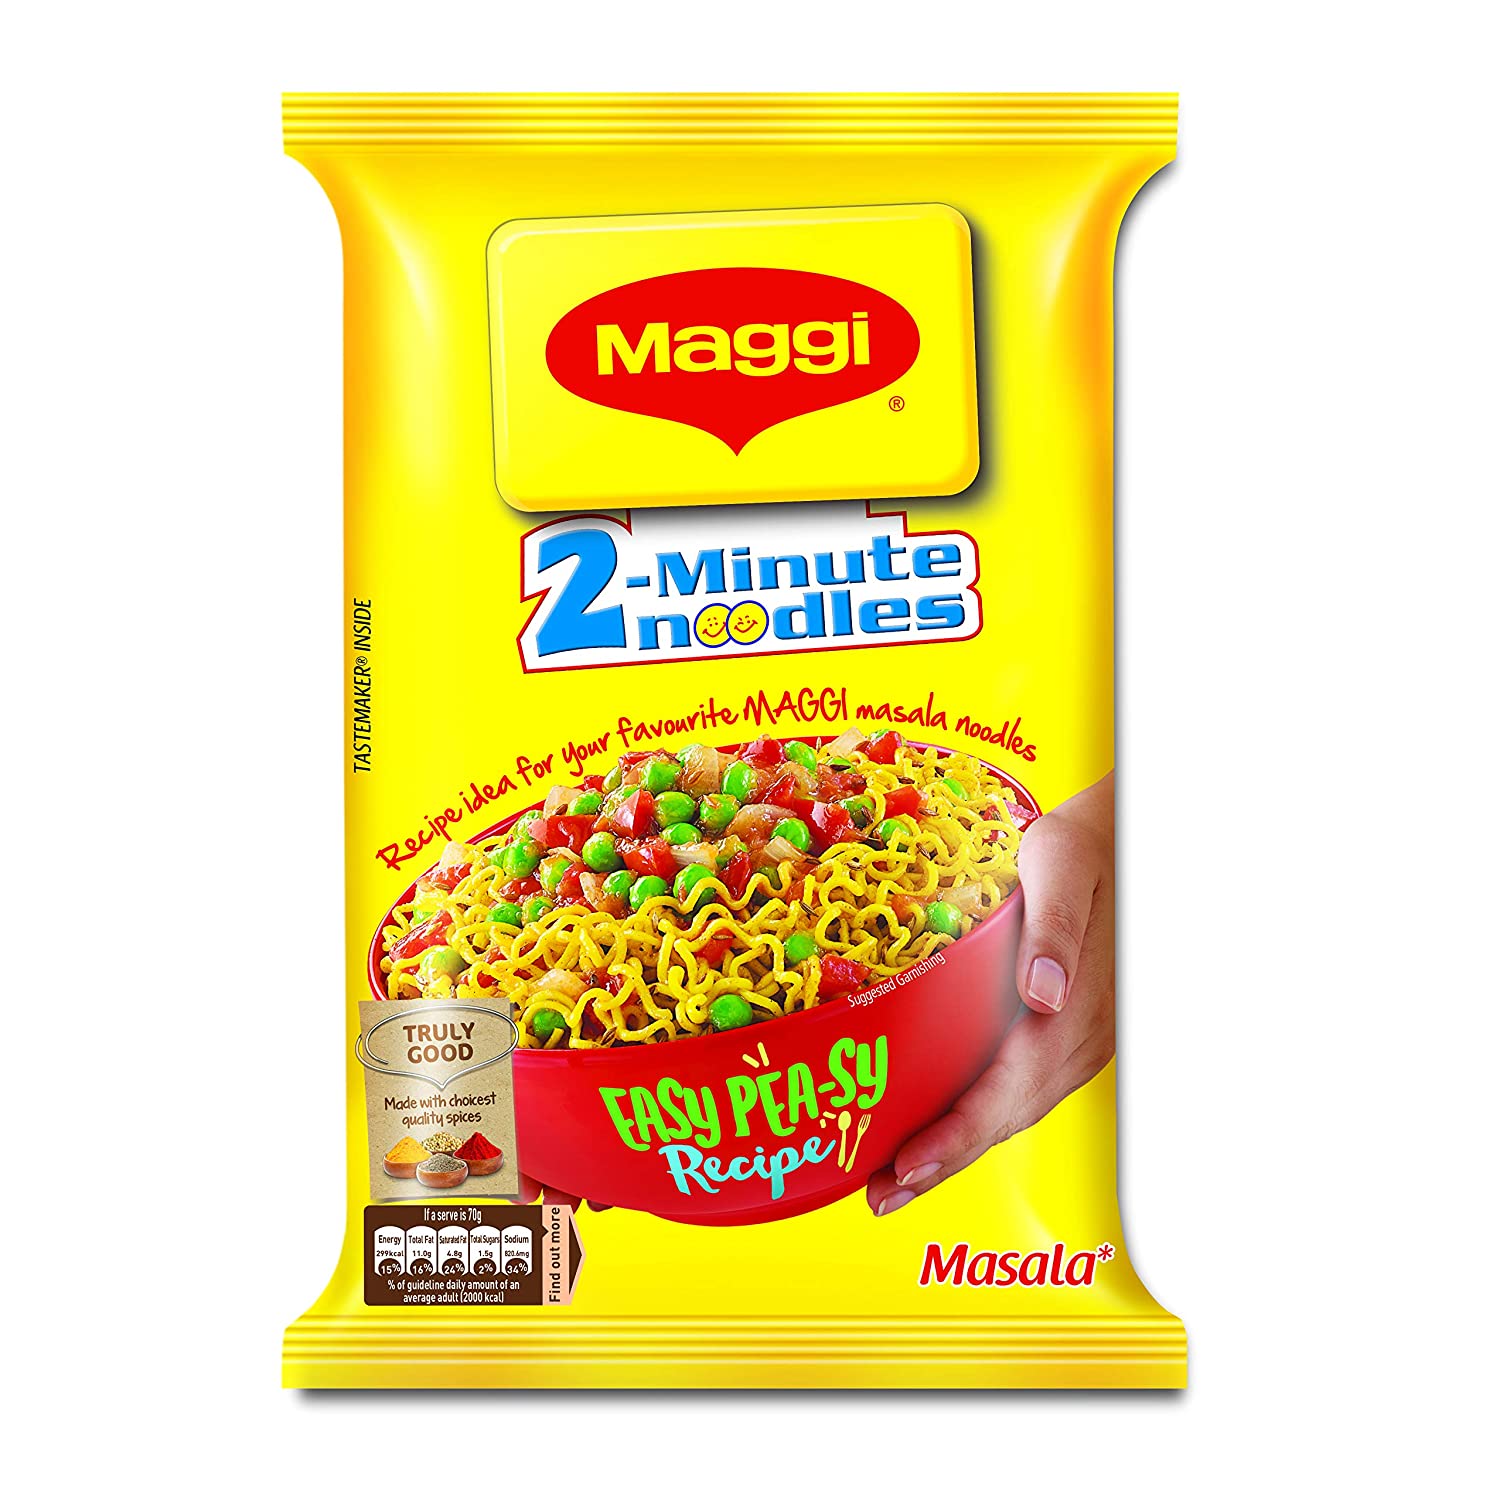 2 Minute Noodles MASALA, Maggi (Лапша быстрого приготовления МАСАЛА, Магги), 70 г.